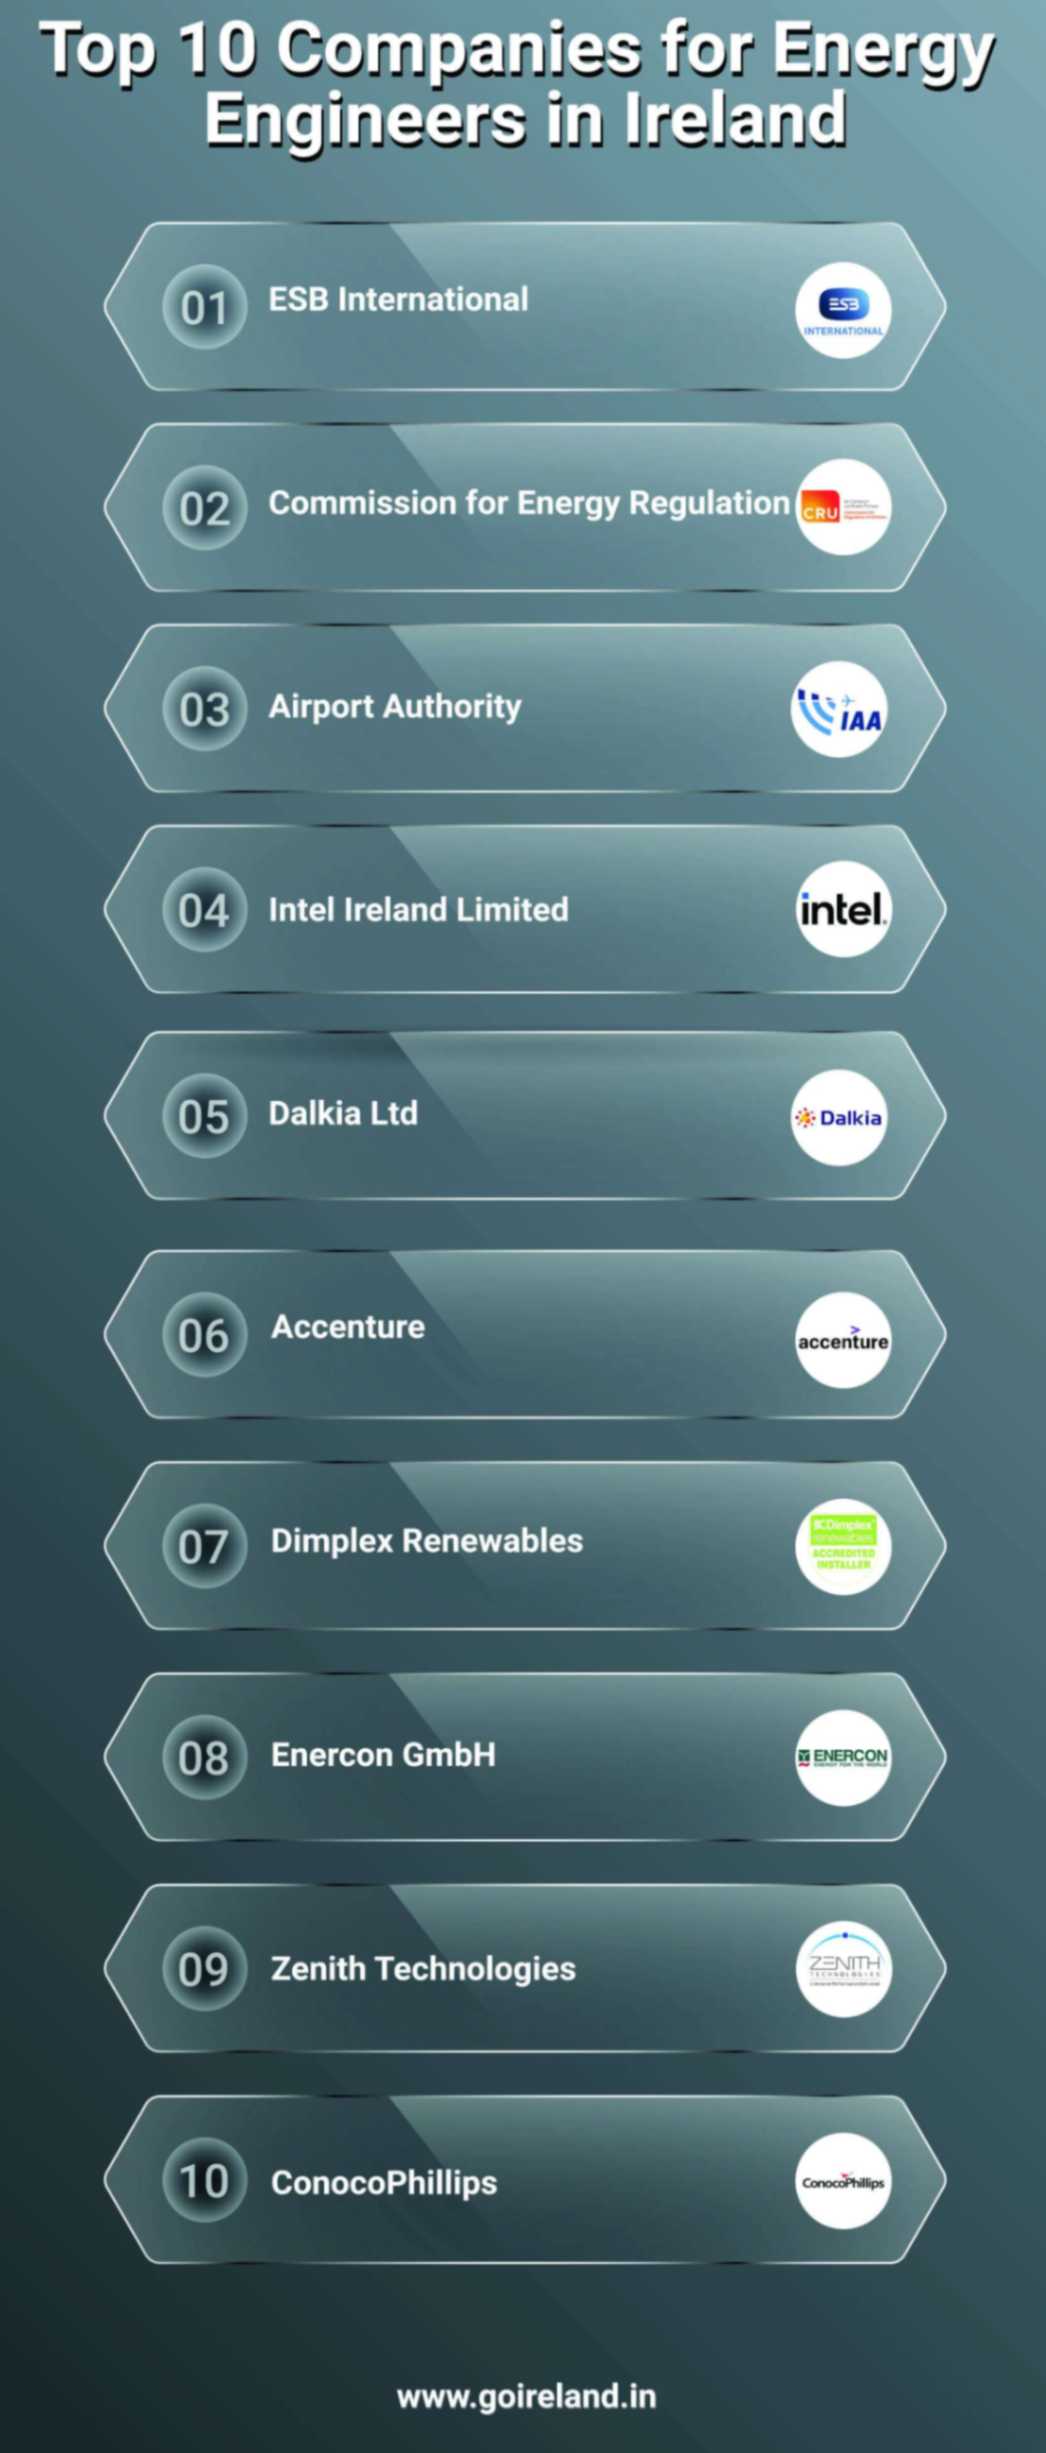 Top 10 companies for Energy Engineers in Ireland